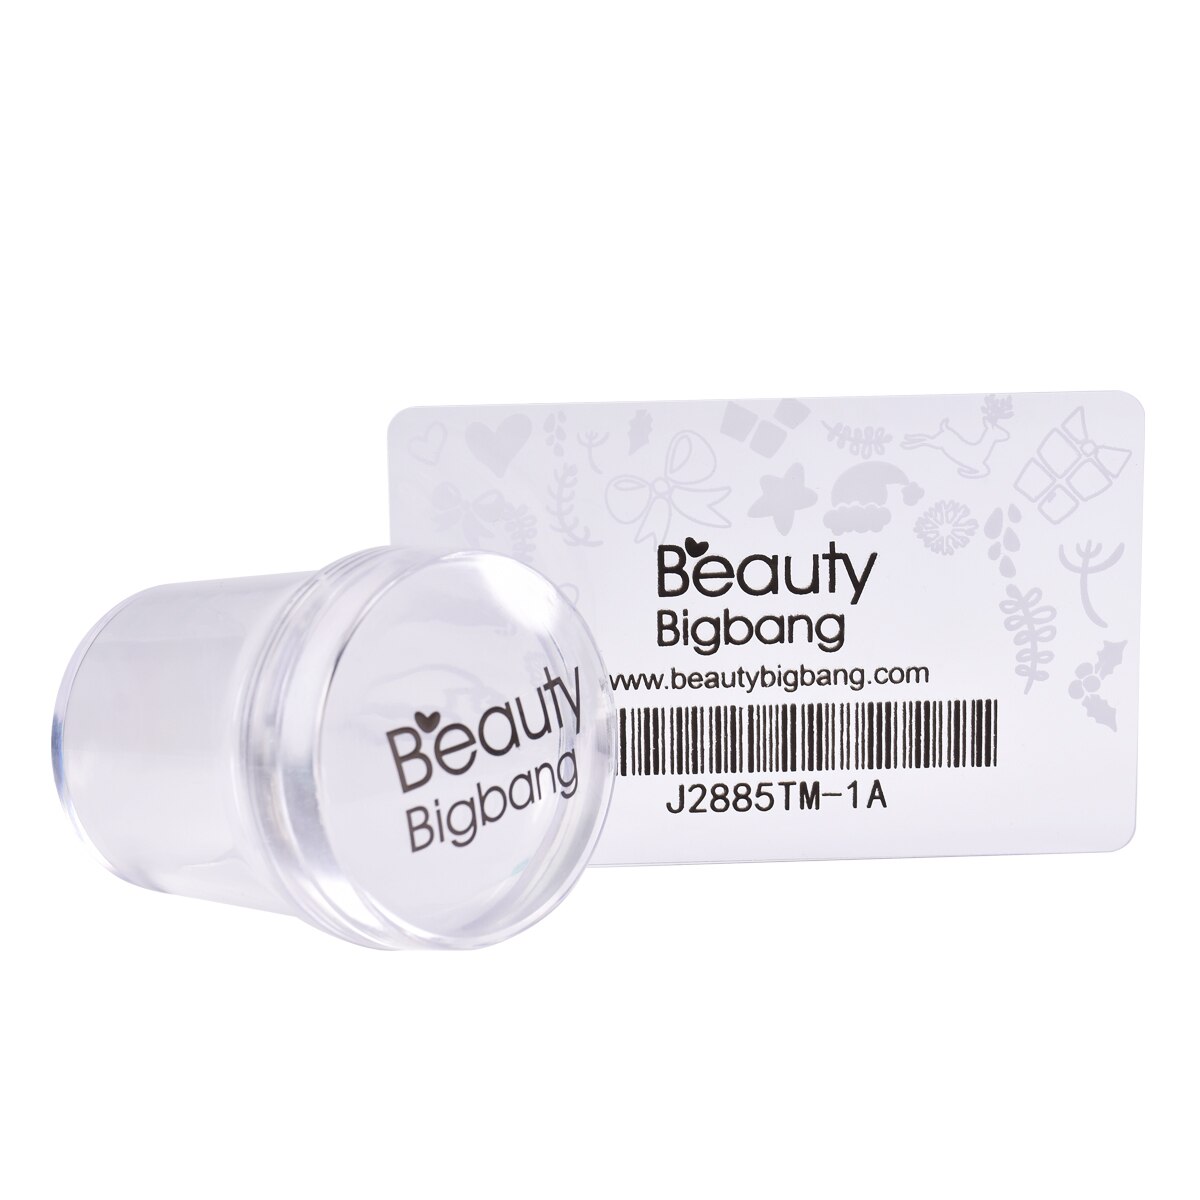 Beauty Bigbang 4Cm Nail Art Clear Jelly Stamper Marshmallow Stamper + Schraper